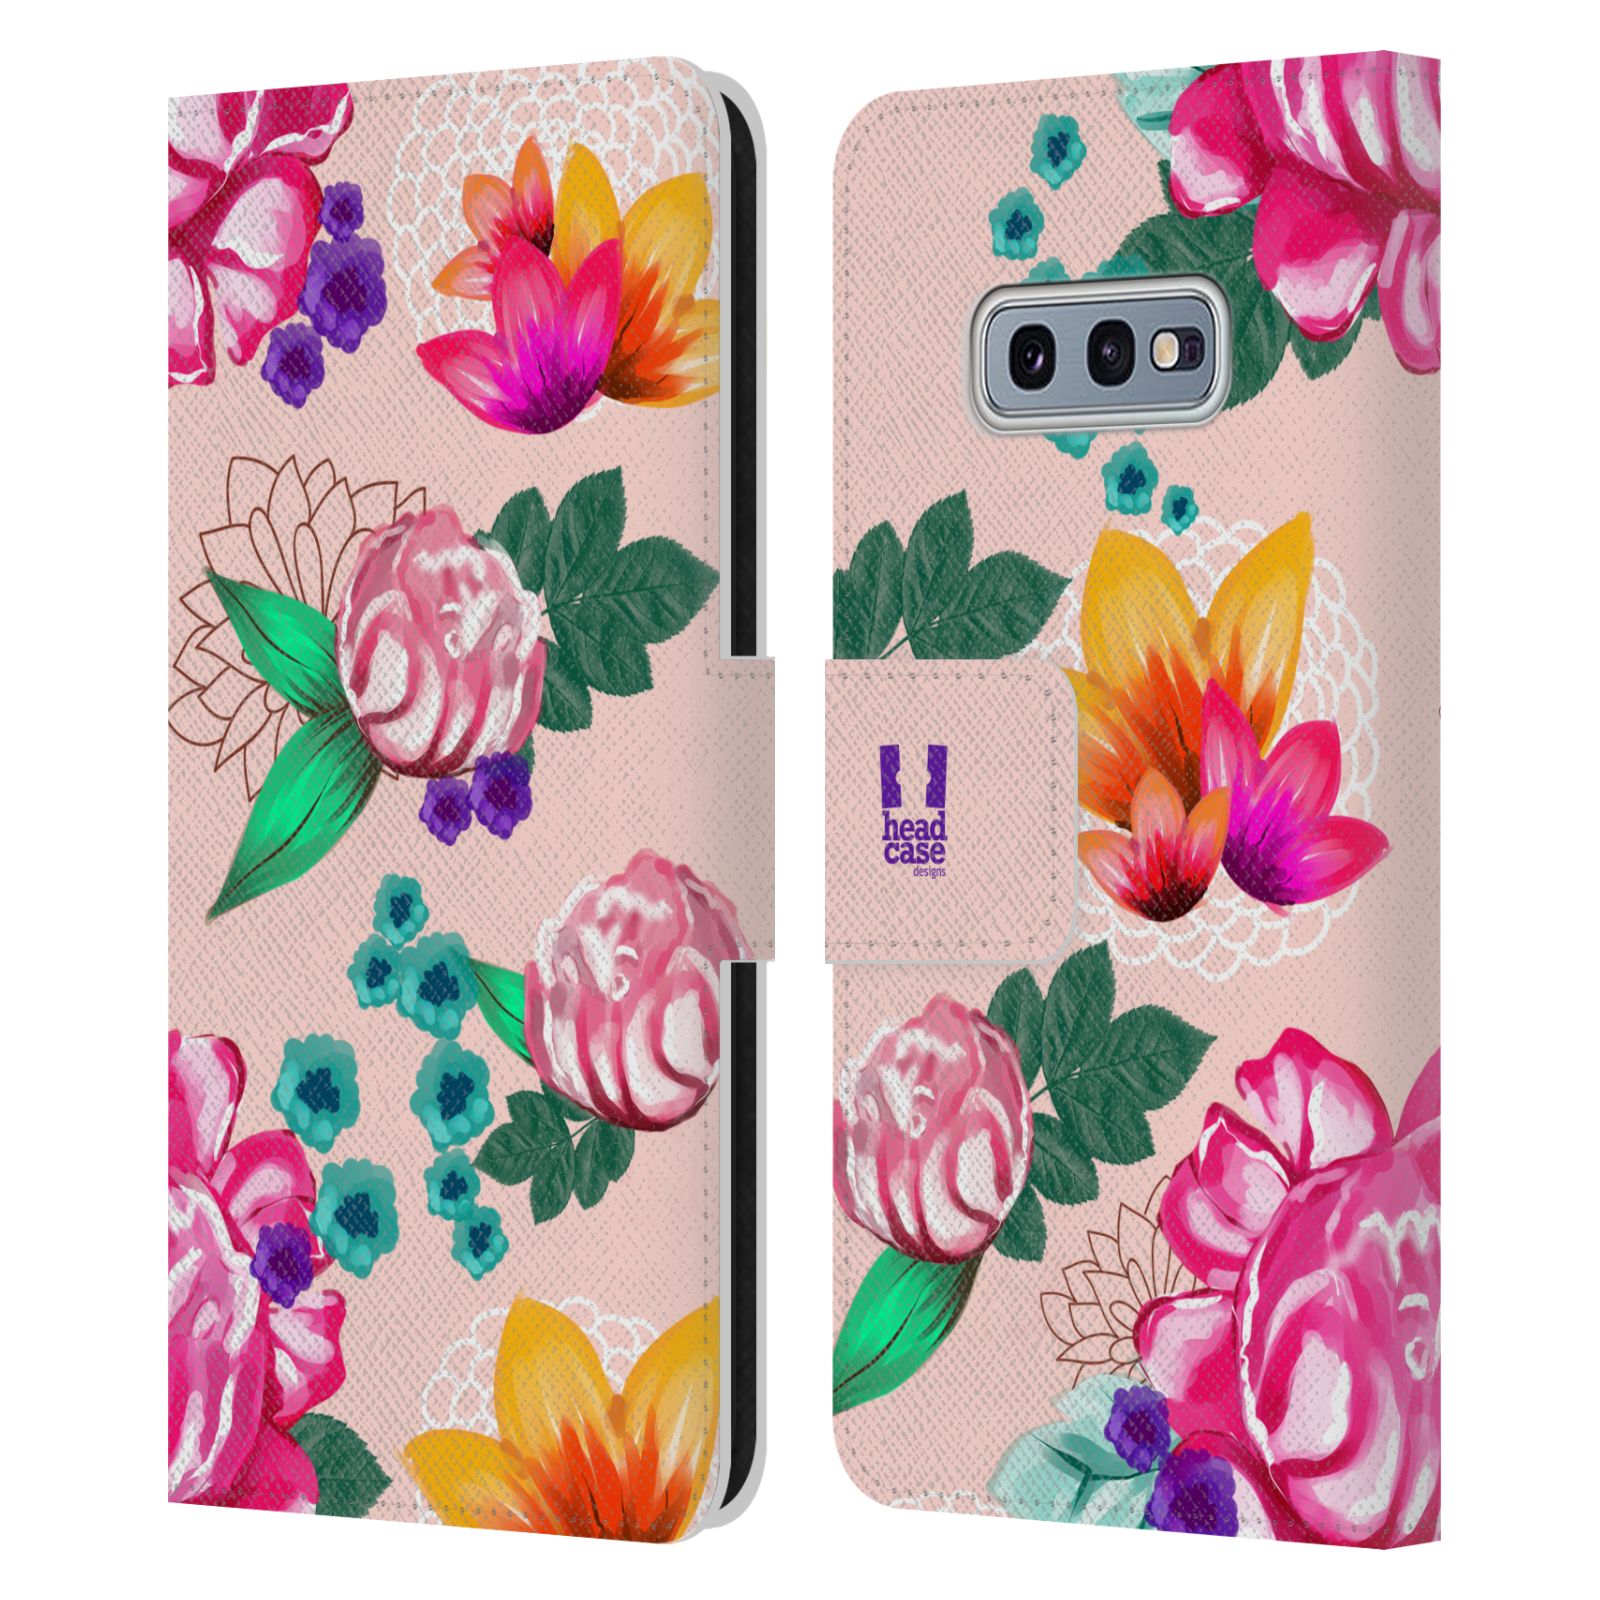 Pouzdro HEAD CASE na mobil Samsung Galaxy S10e barevné kreslené květiny růžová